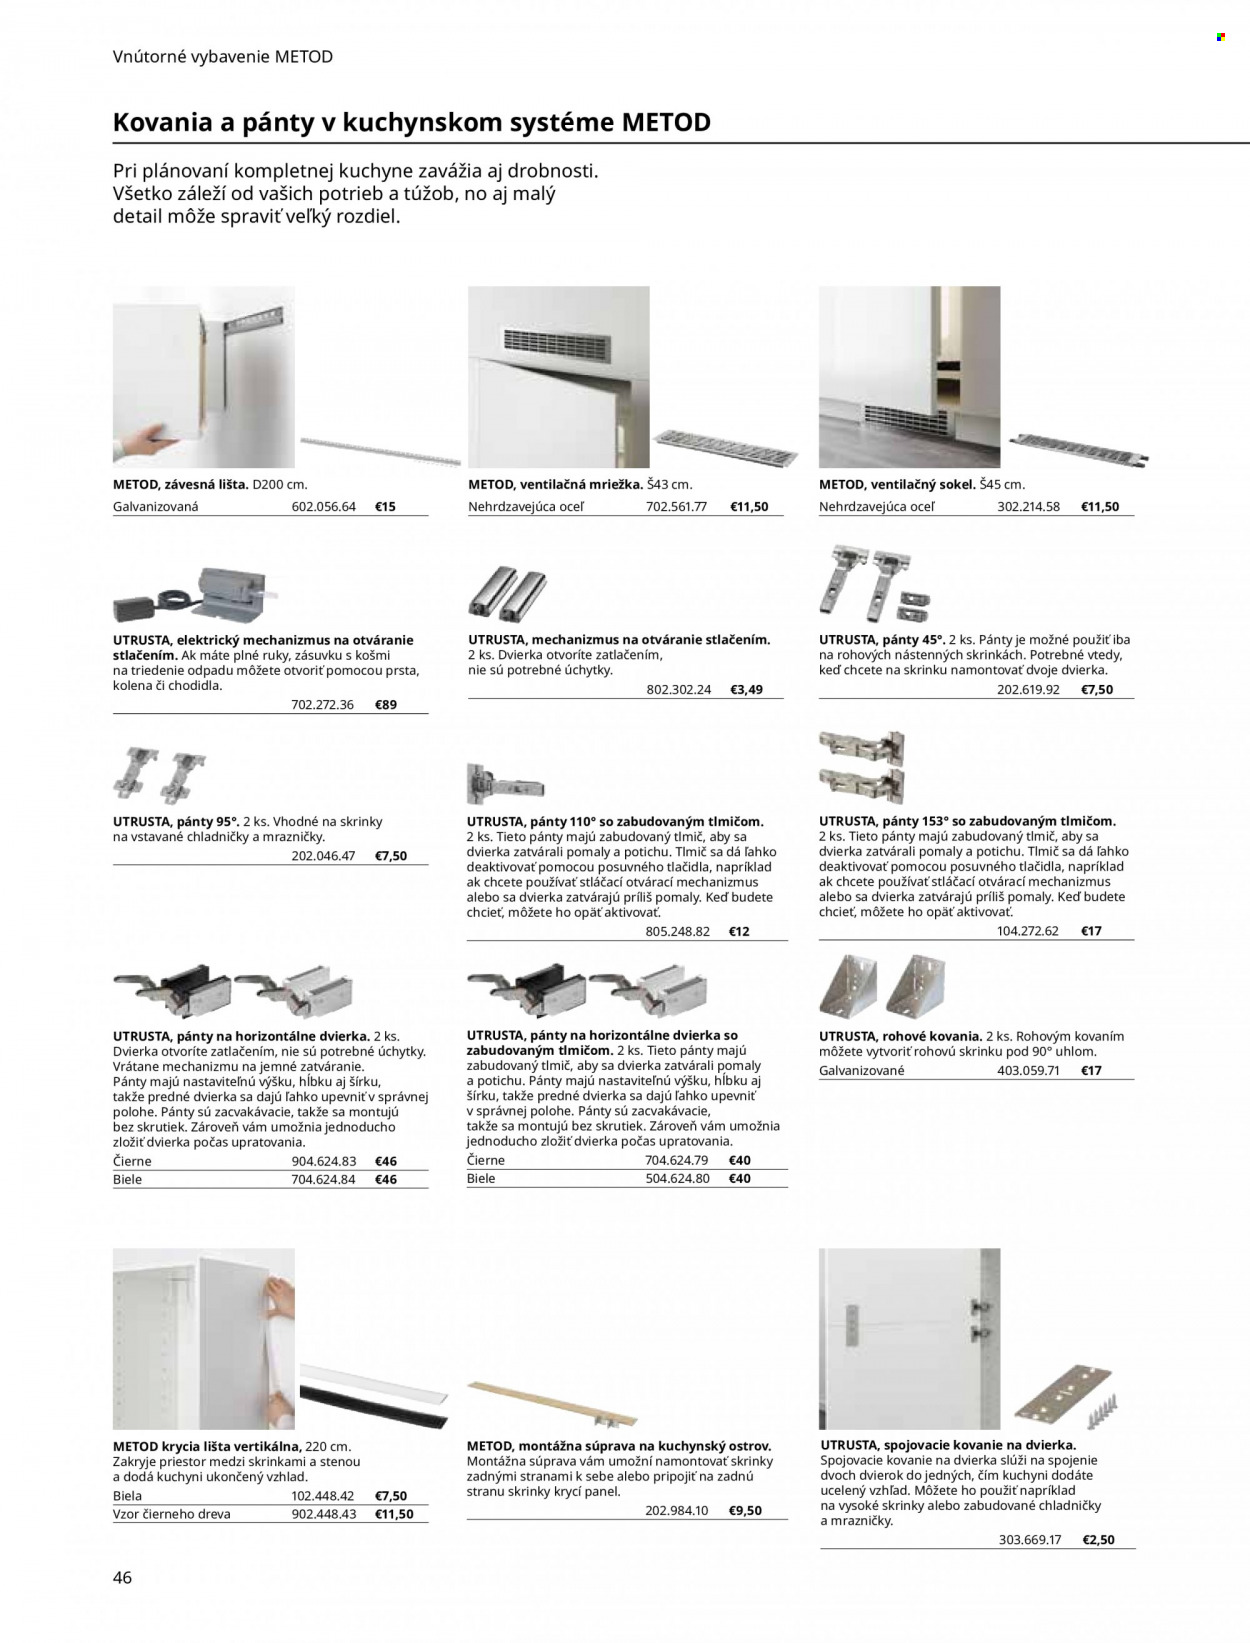 Leták IKEA - Produkty v akcii - tlmič, Metod, vypínač. Strana 46.